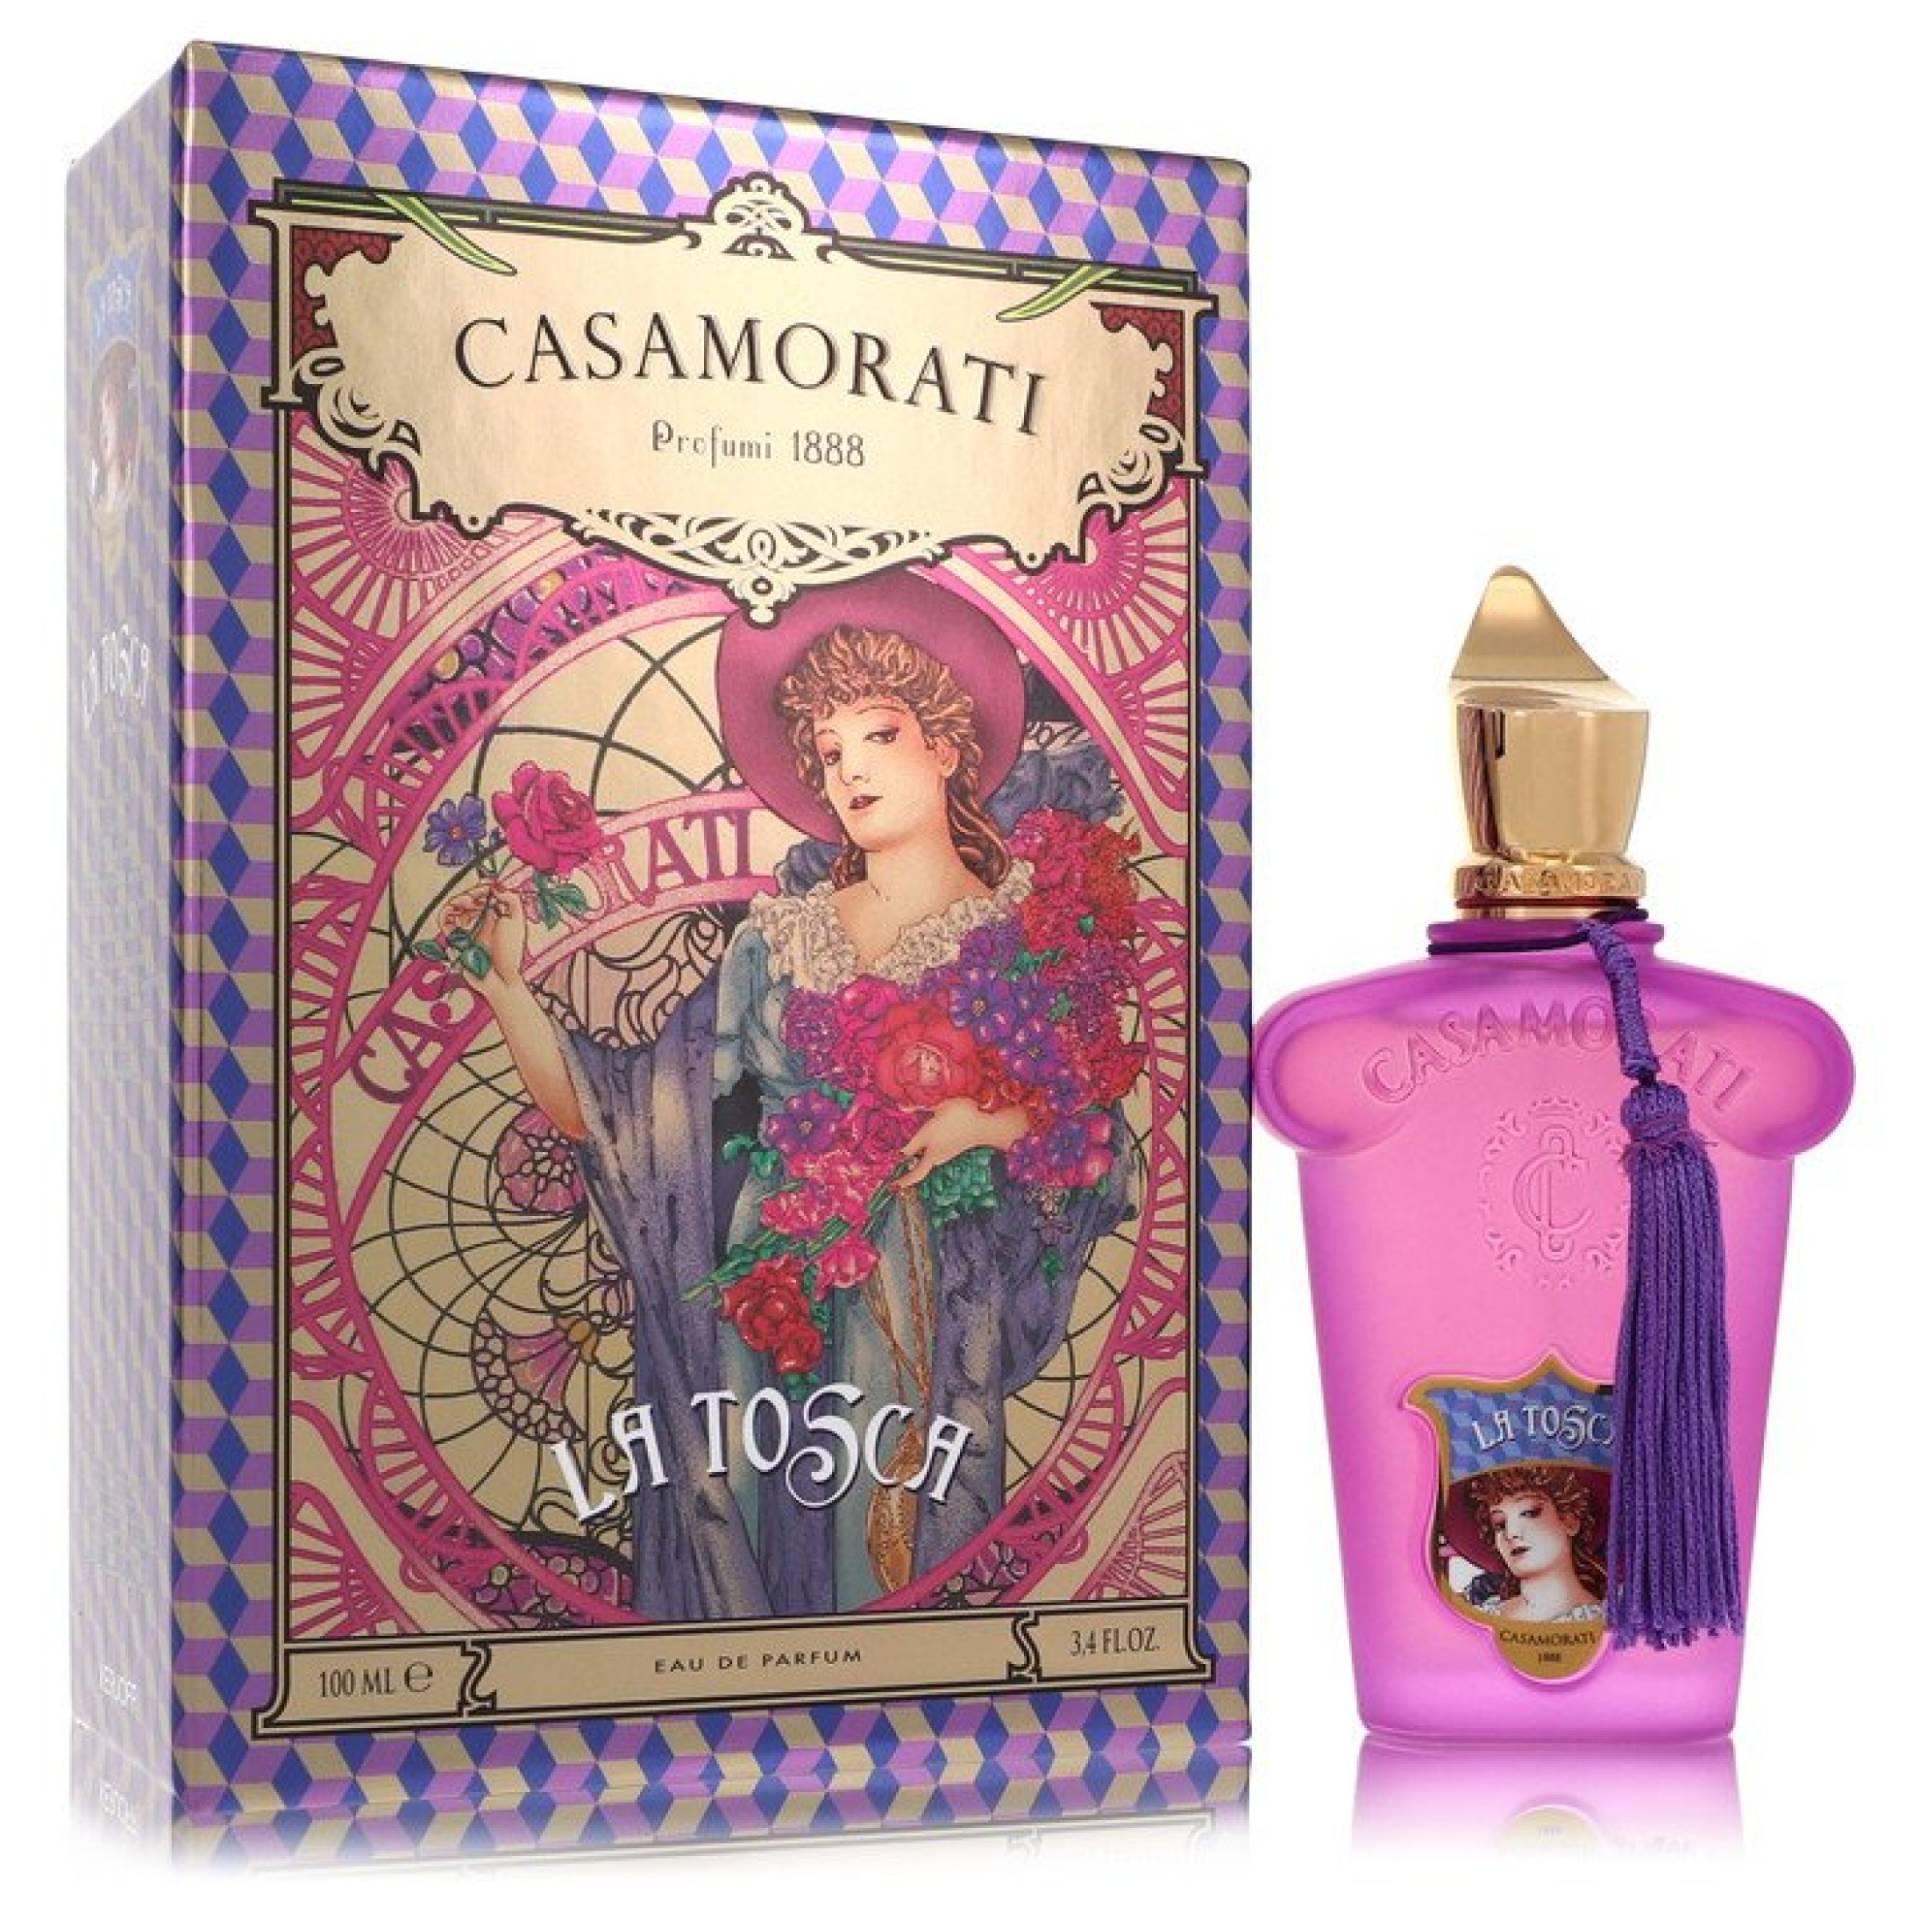 Xerjoff Casamorati 1888 La Tosca Eau De Parfum Spray 100 ml von Xerjoff